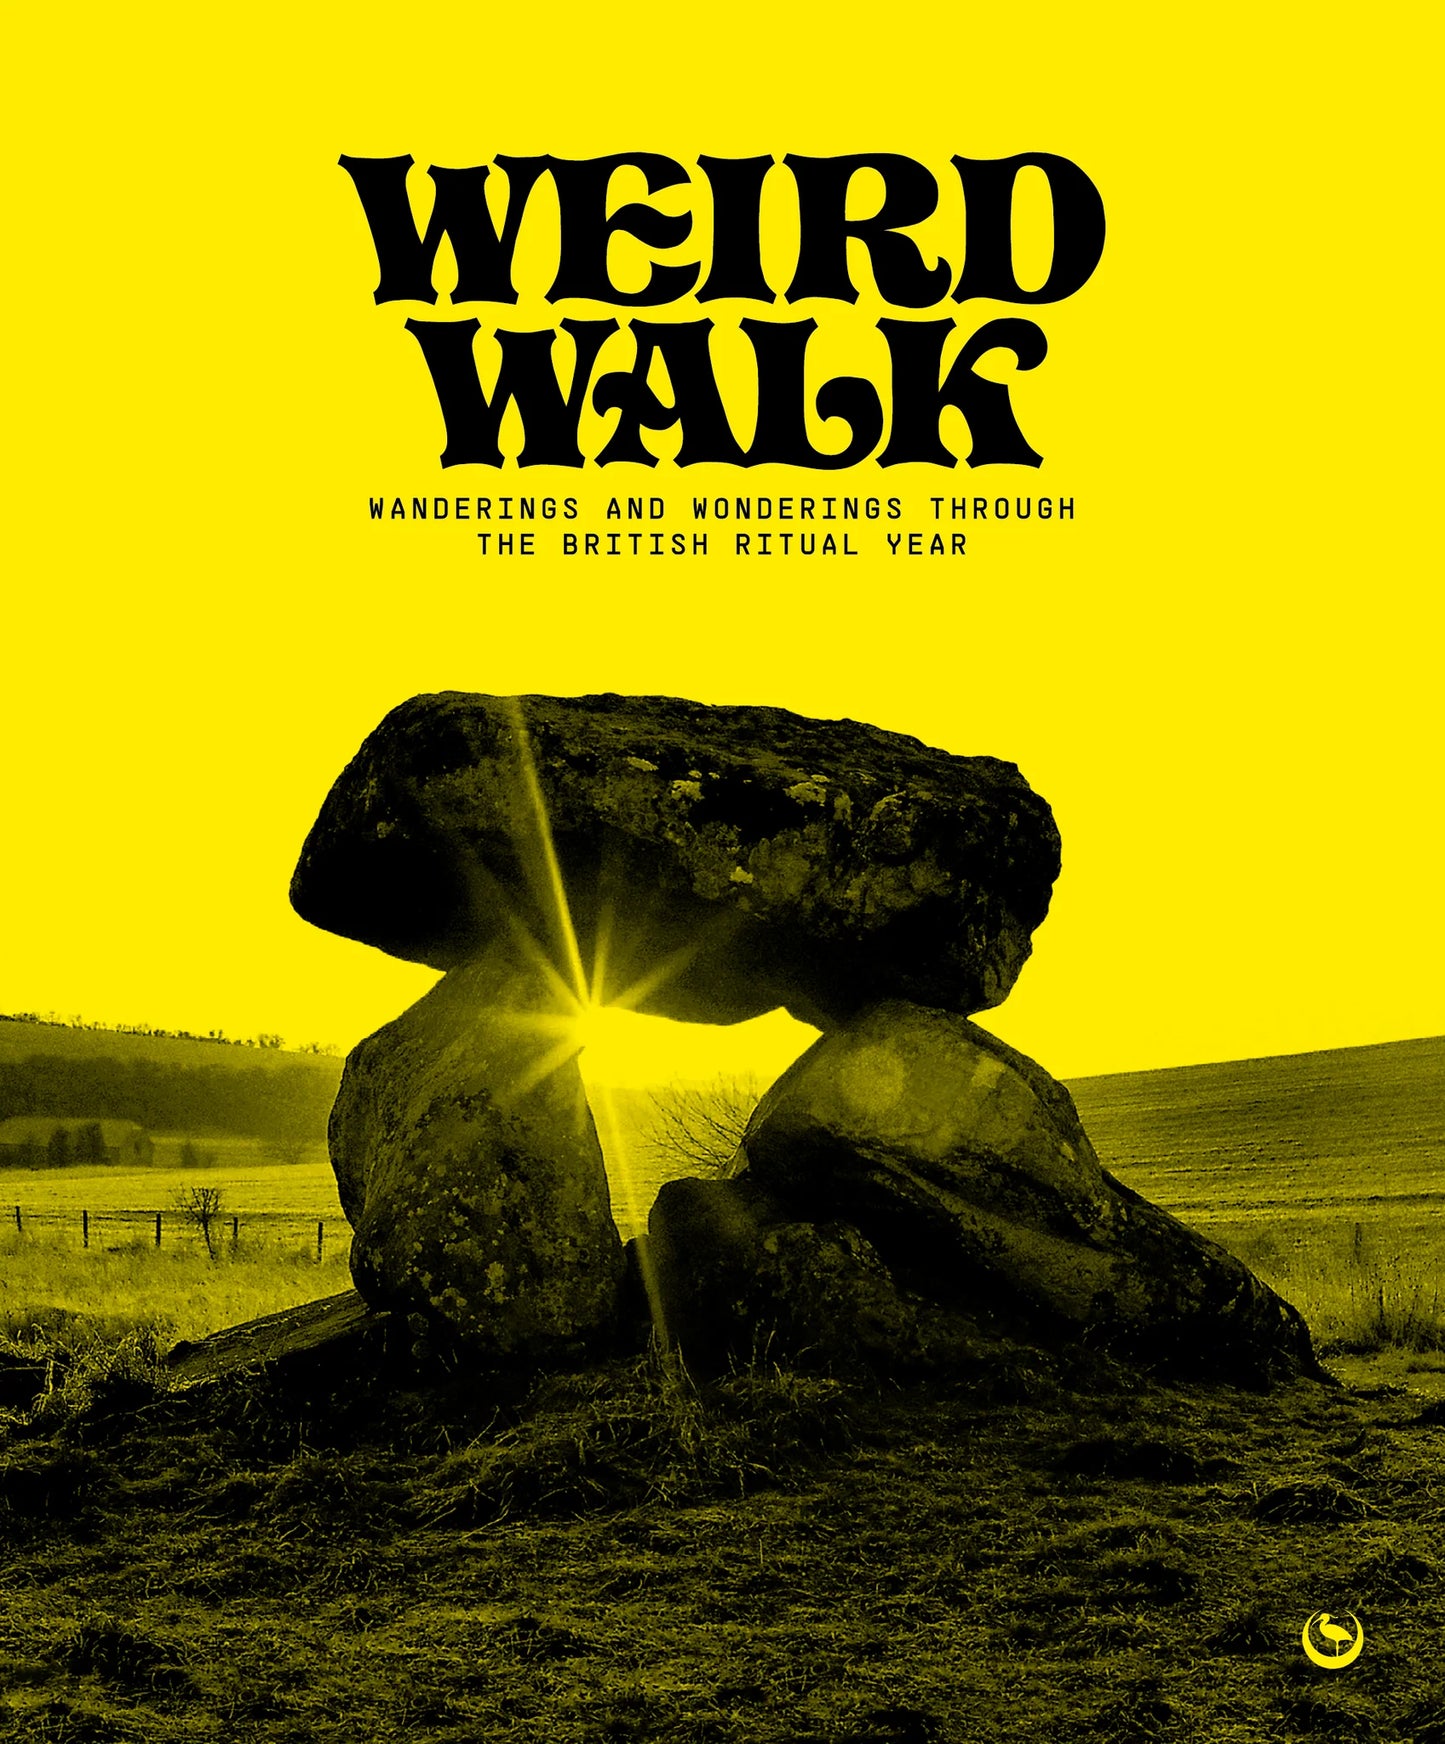 Wanderings and Wonderings Through the British Ritual Year (Pre-Order) by Weird Walk